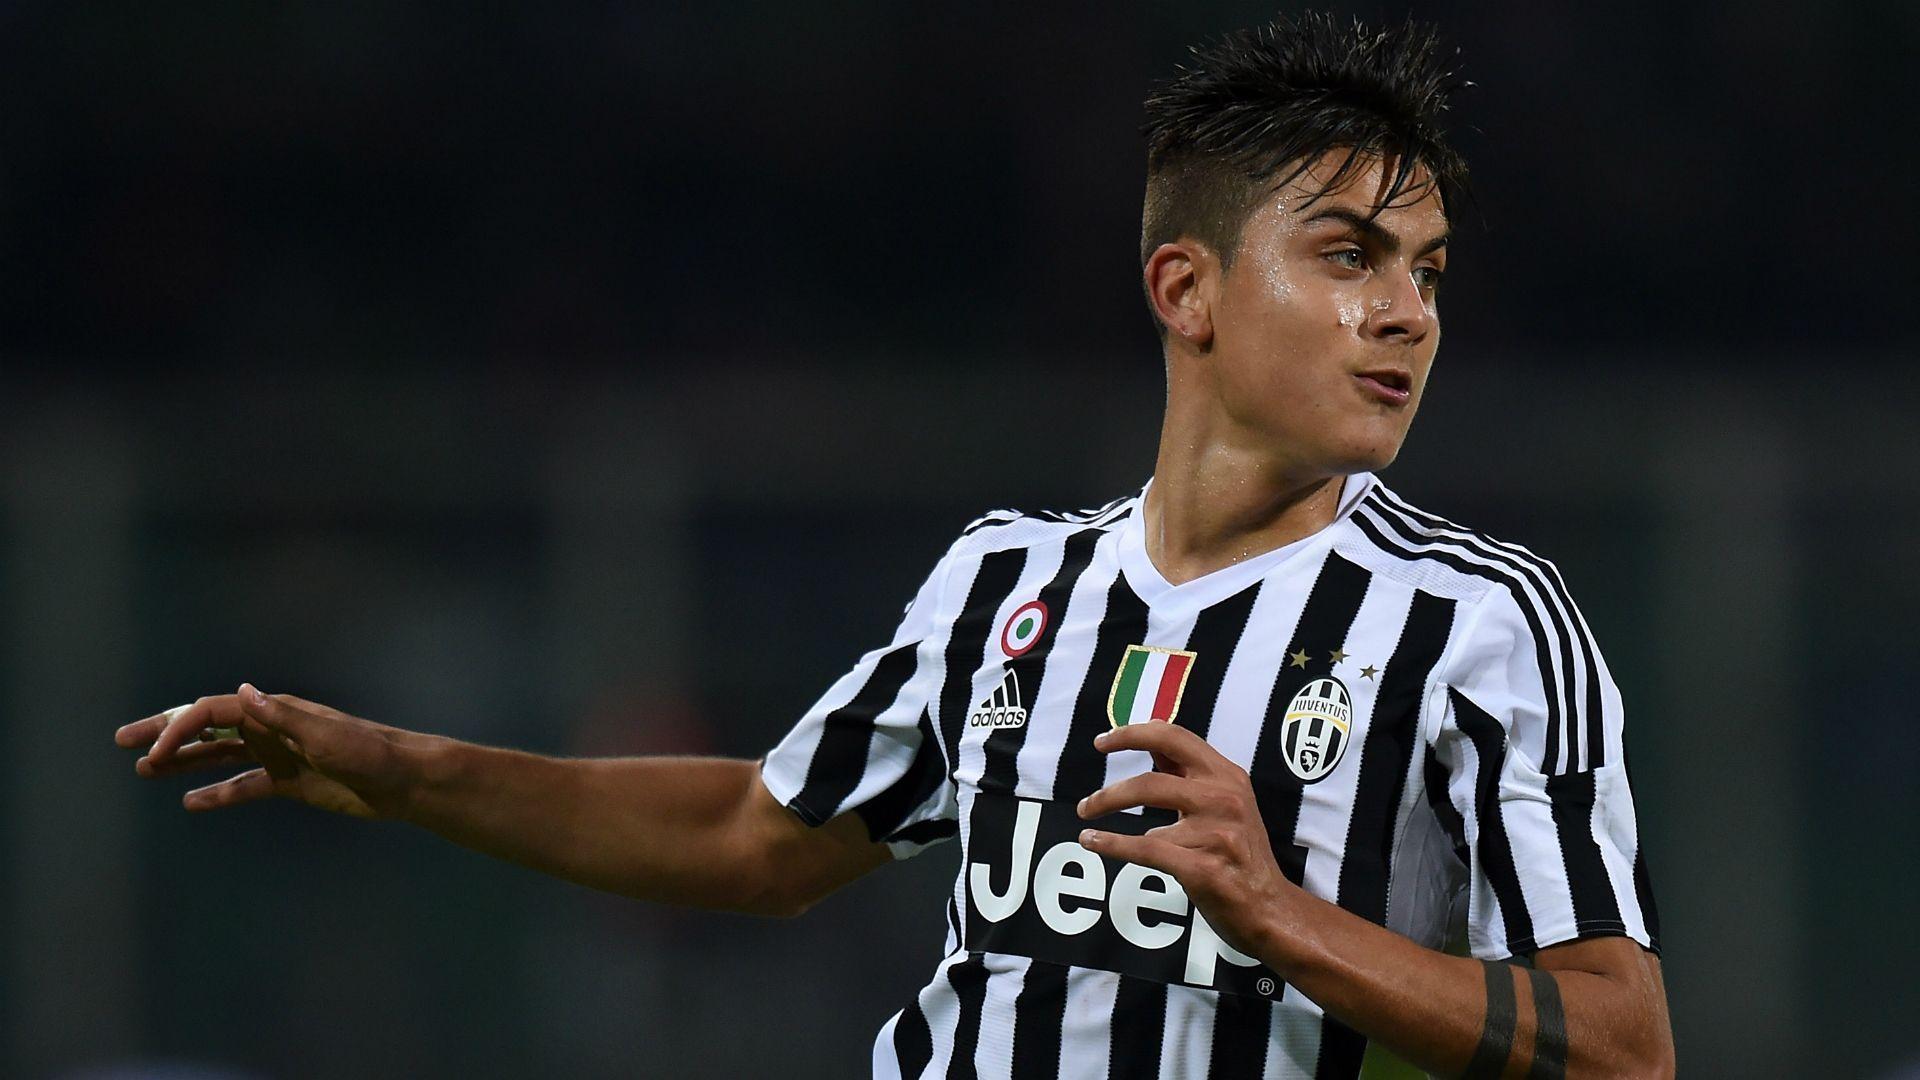 Football. Juventus news: Chiellini hails "humble" Dybala